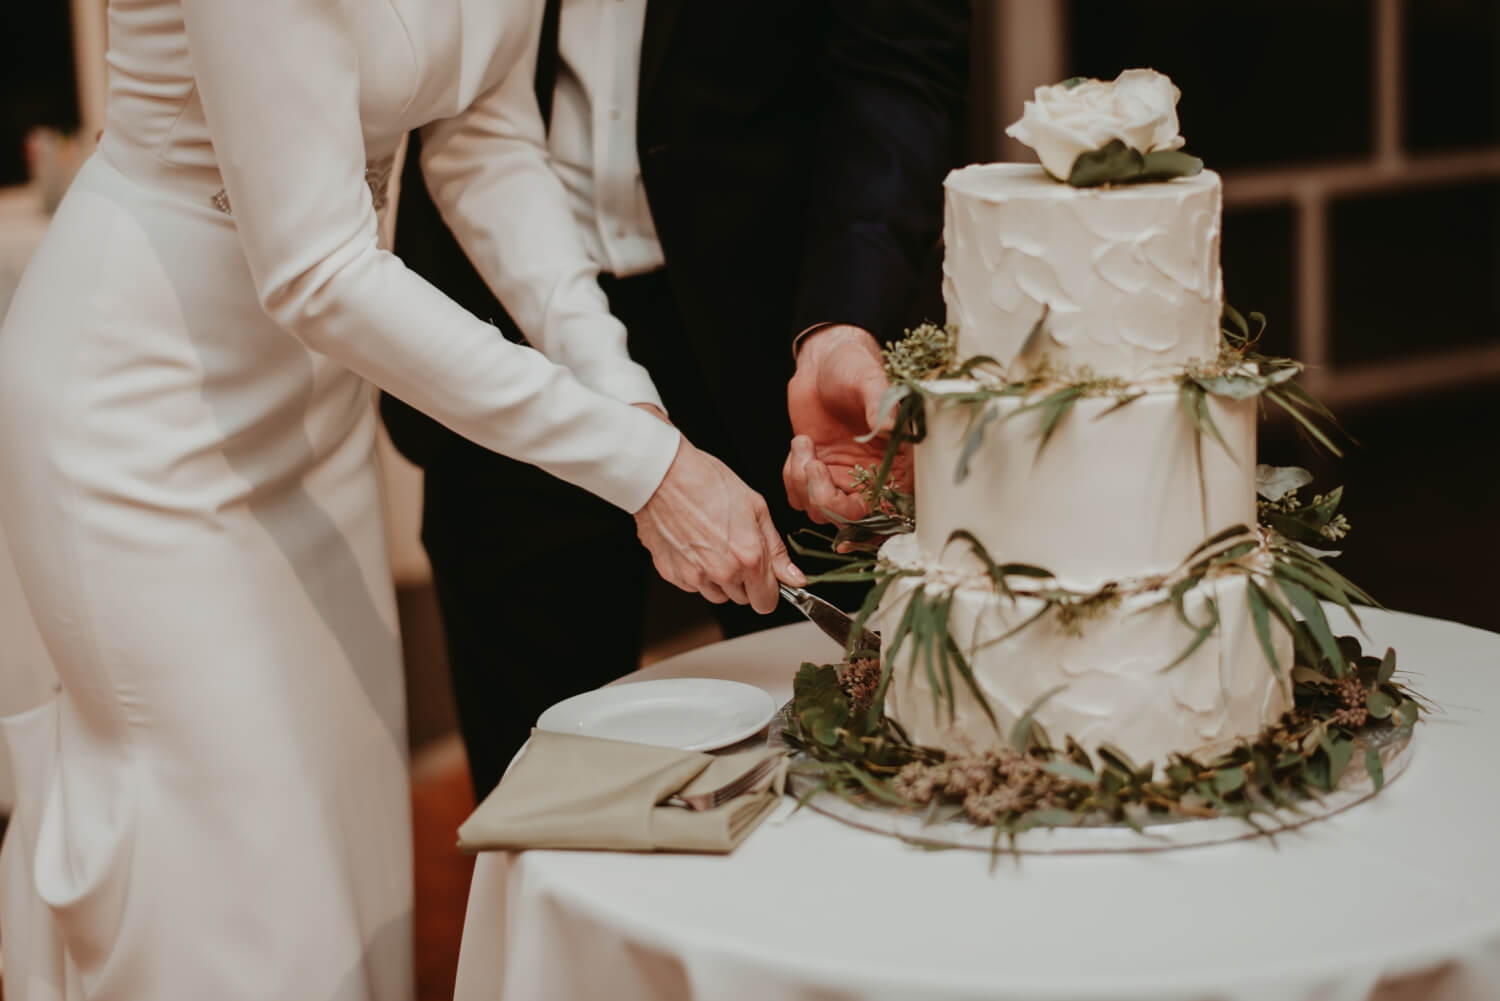 Reception Decor Elmhurst art Museum Wedding - The Adamkovi Chicago wedding photographer - Cake cutting